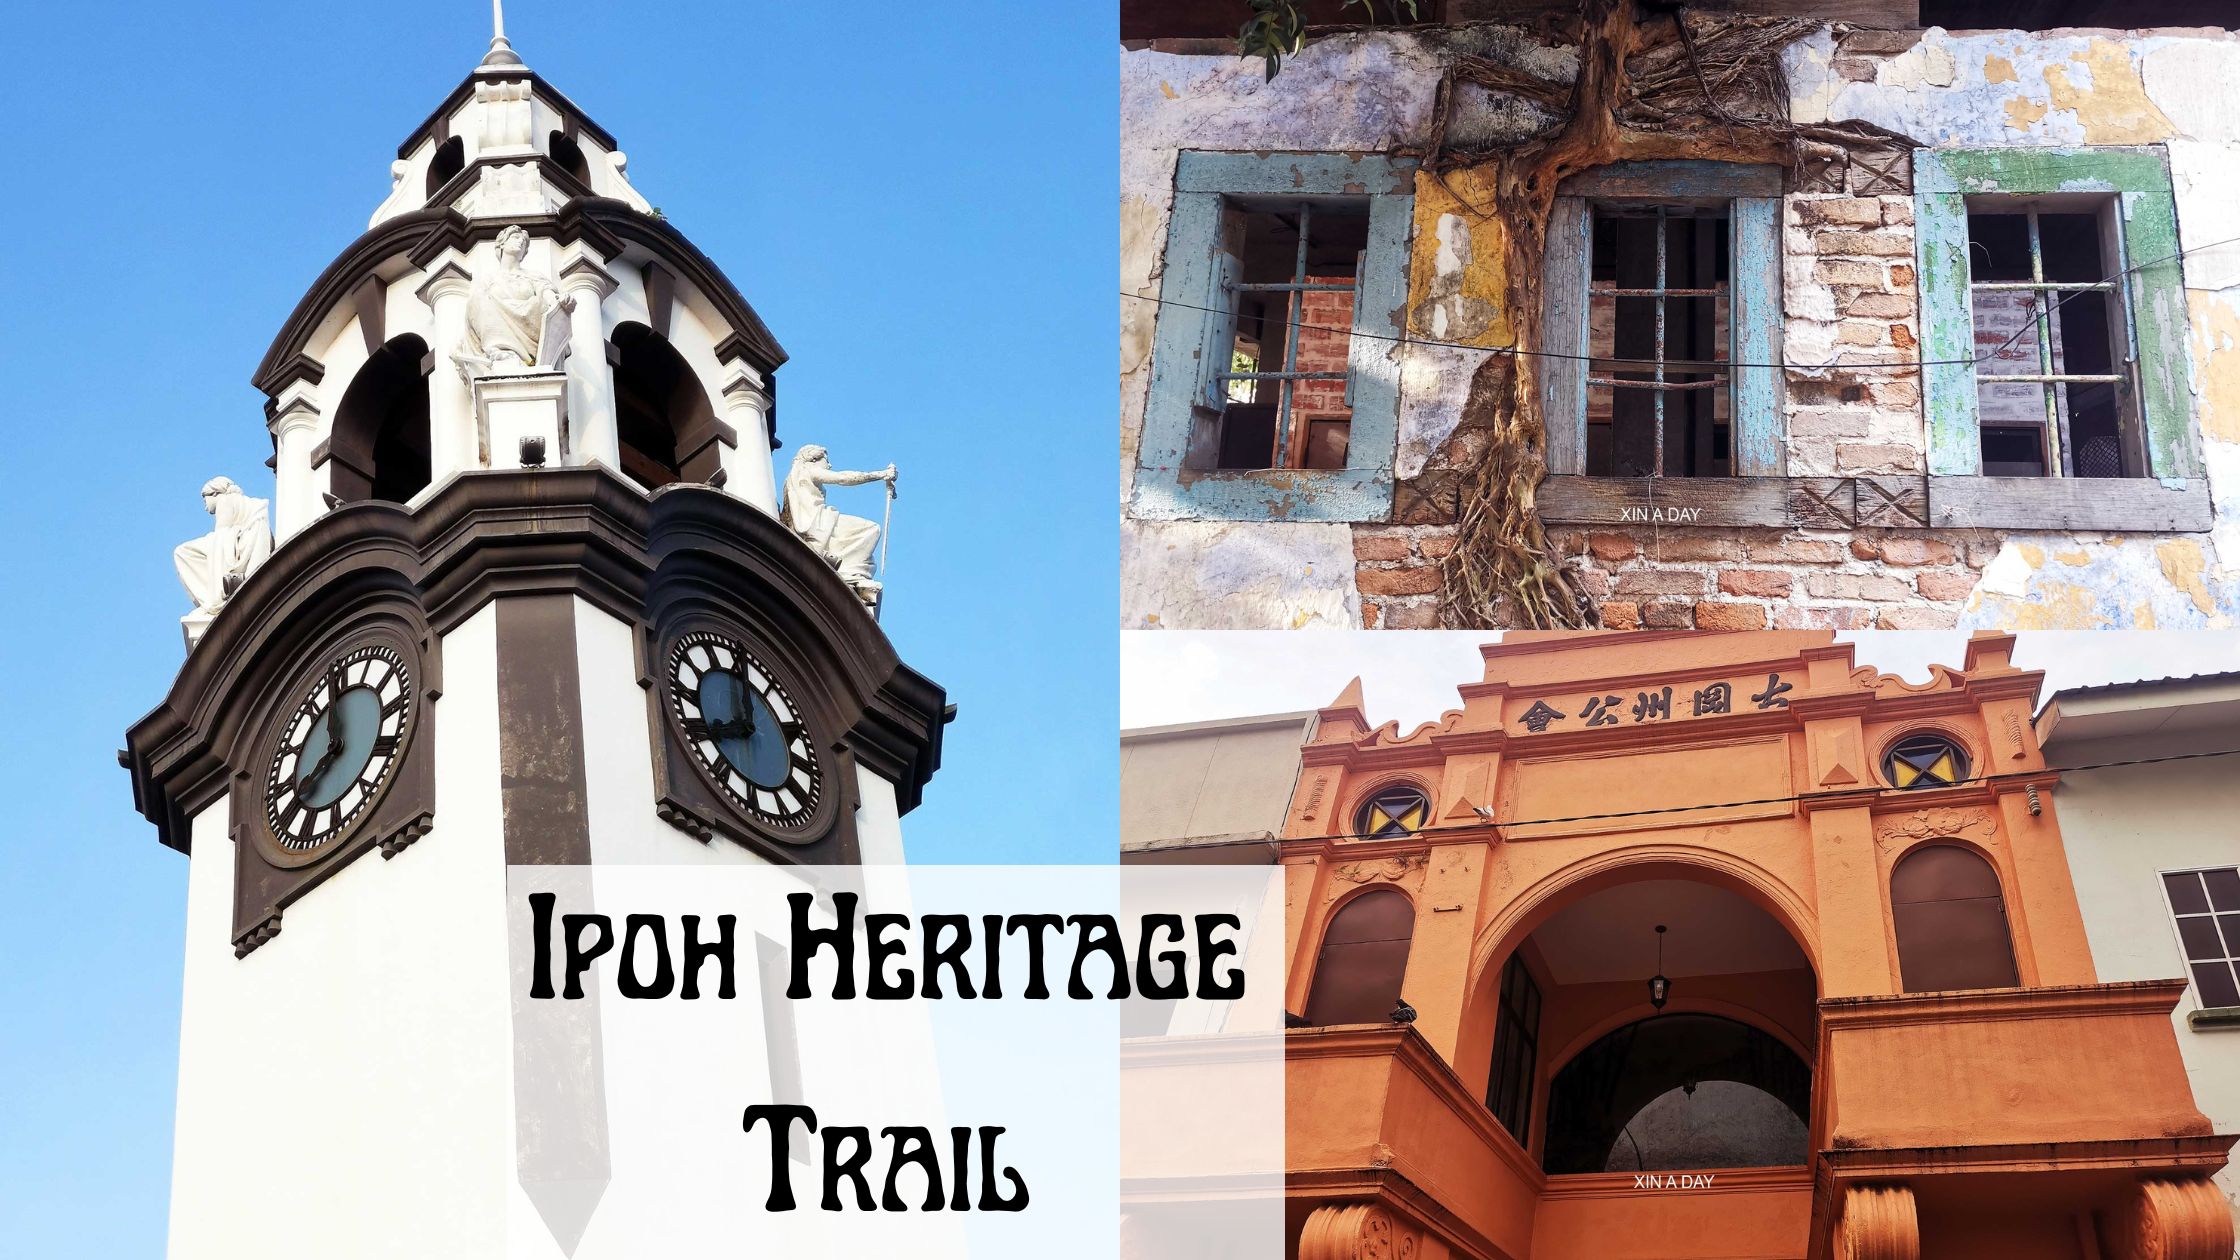 Ipoh Heritage Trail